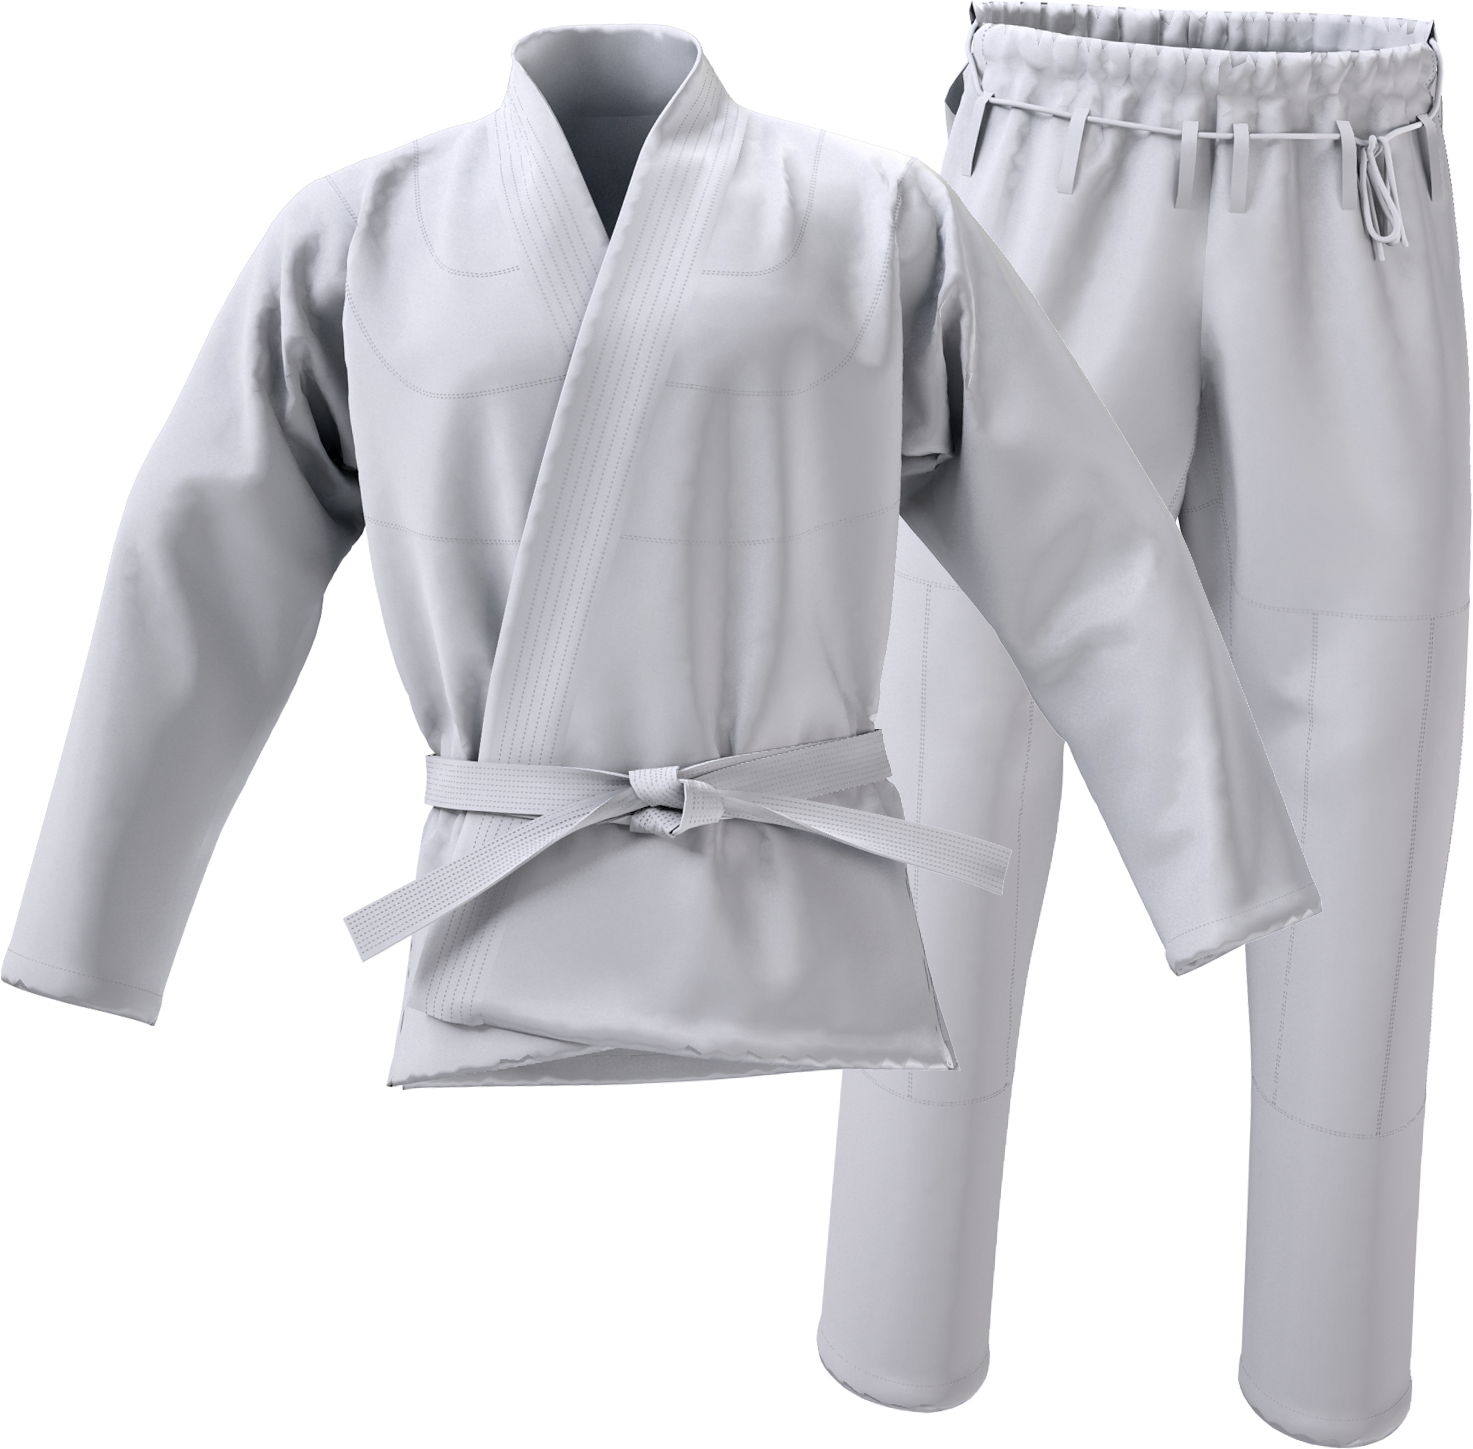 Image of martial arts uniform